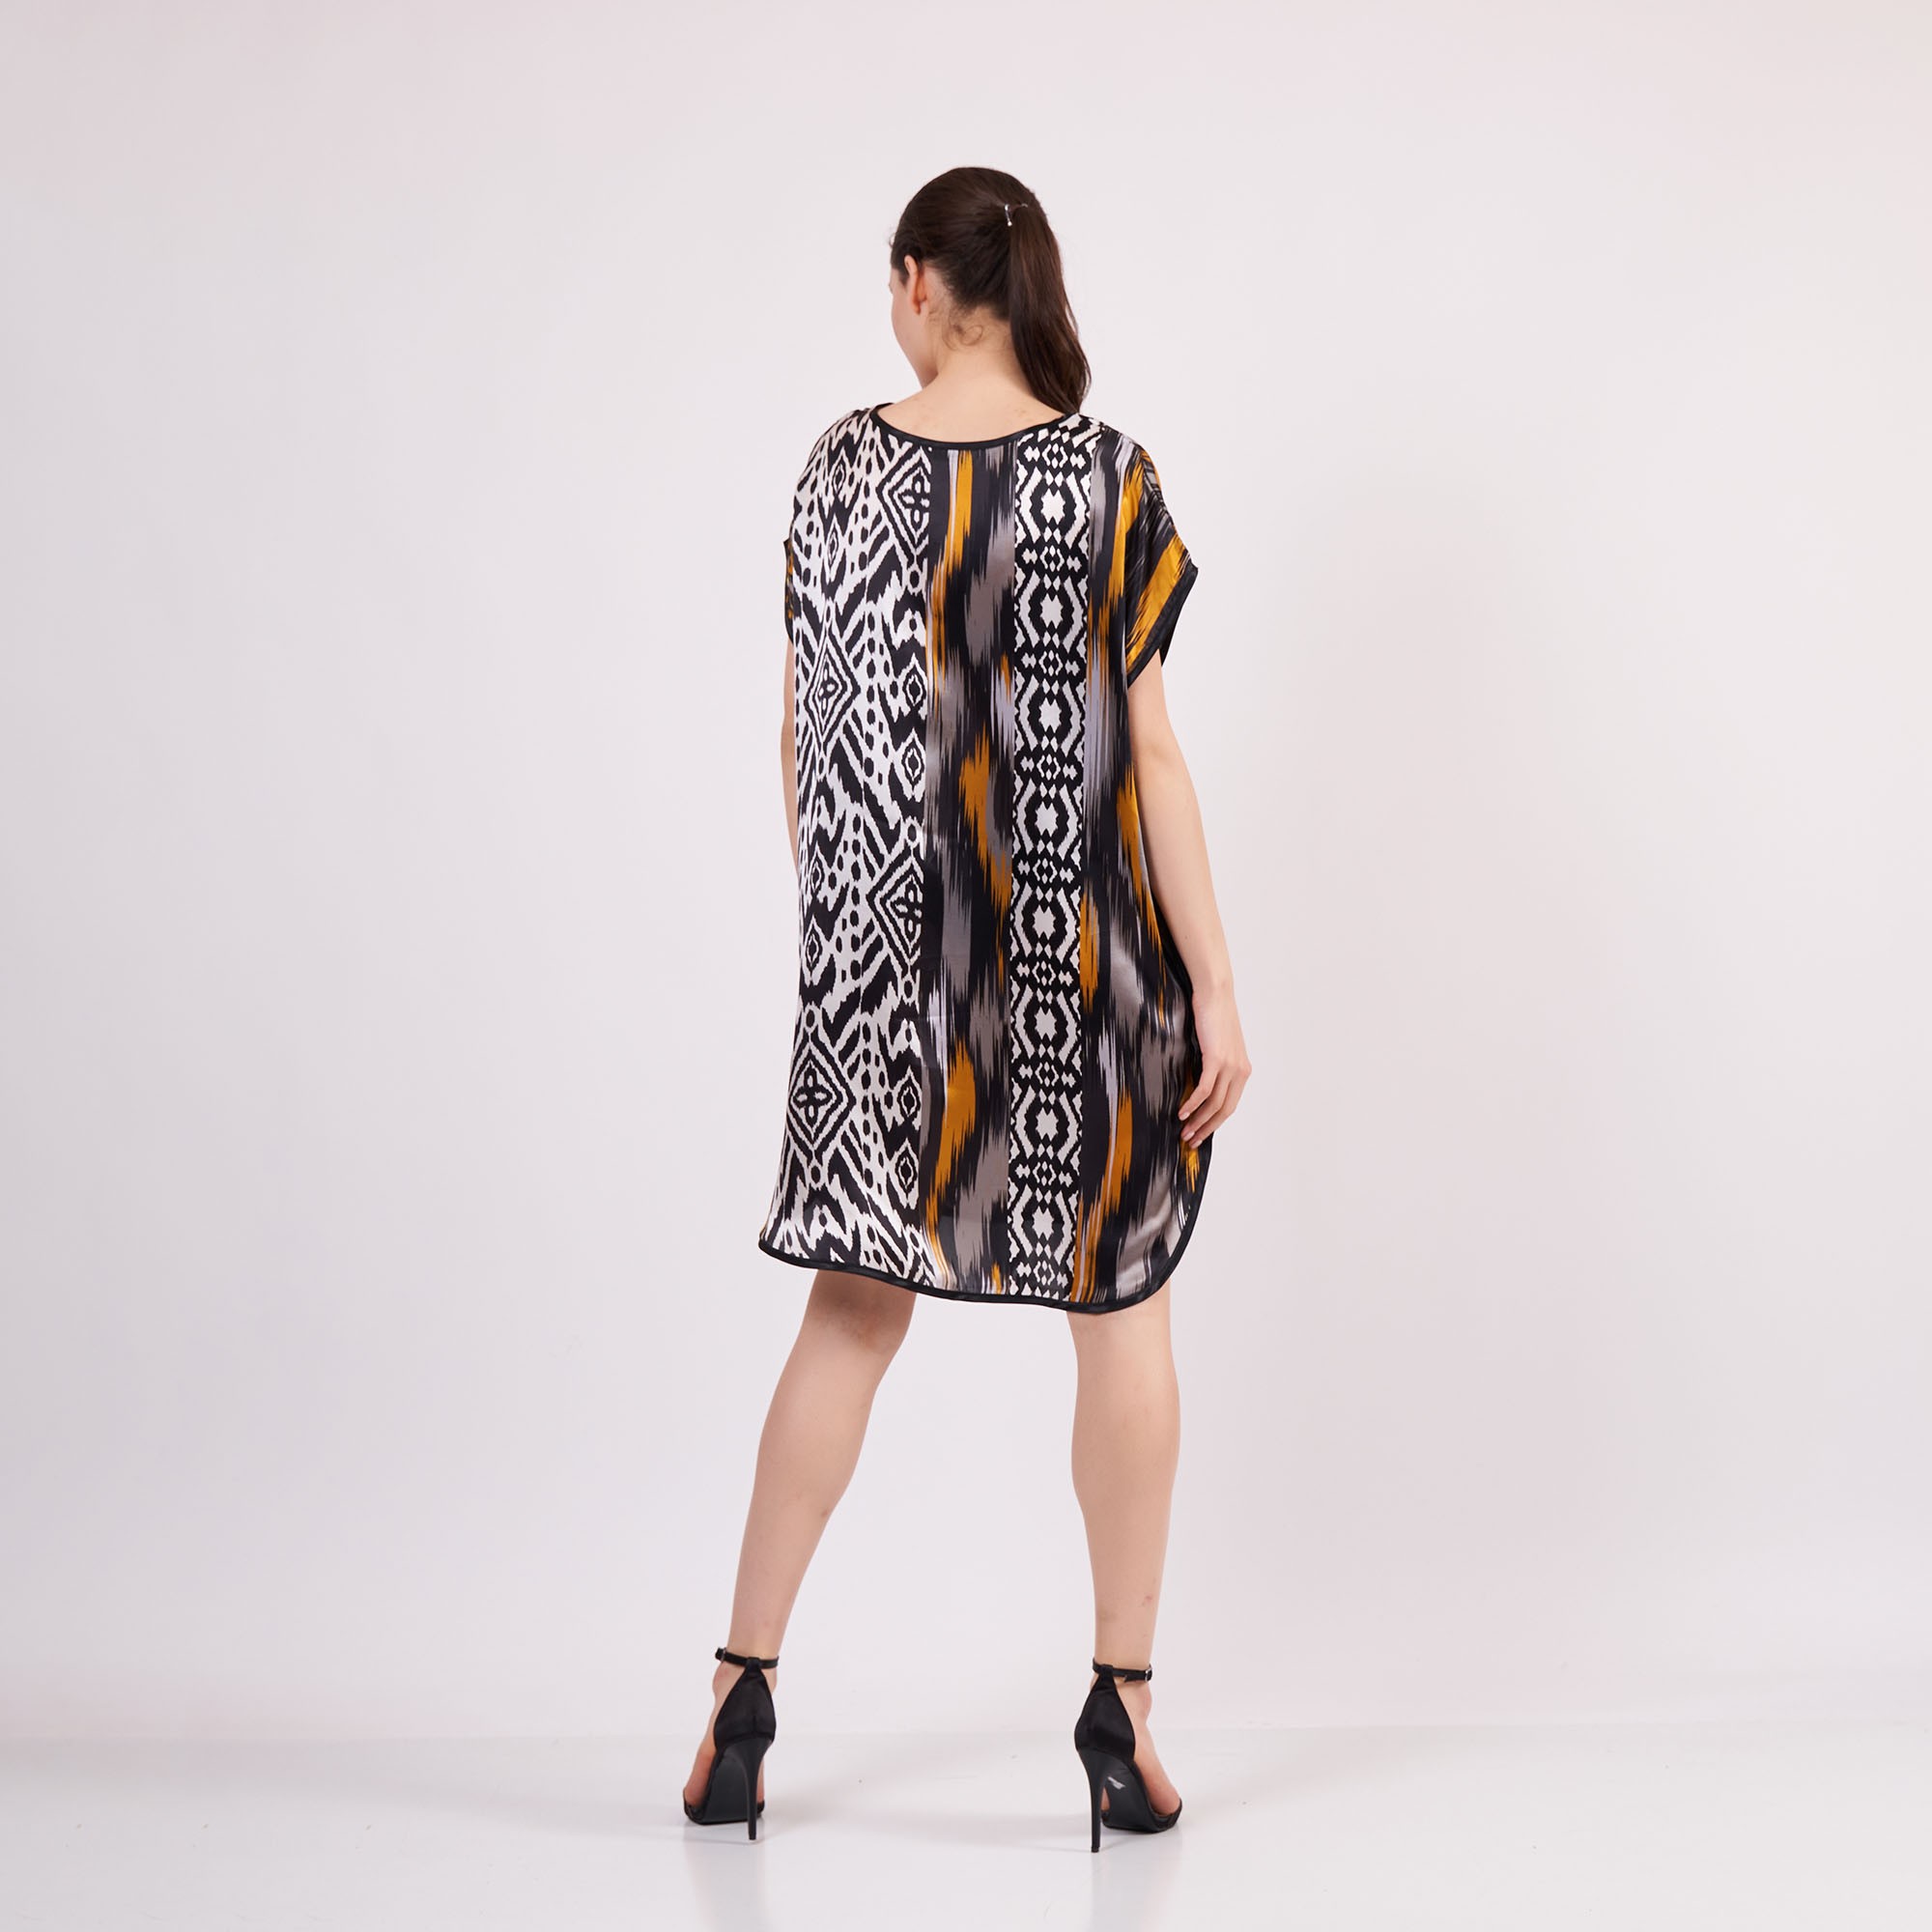 Silk Plus Size Short Dress For Women | Oversized Short Kaftan Ikat Pattern 2 | Loose Fitting Dress